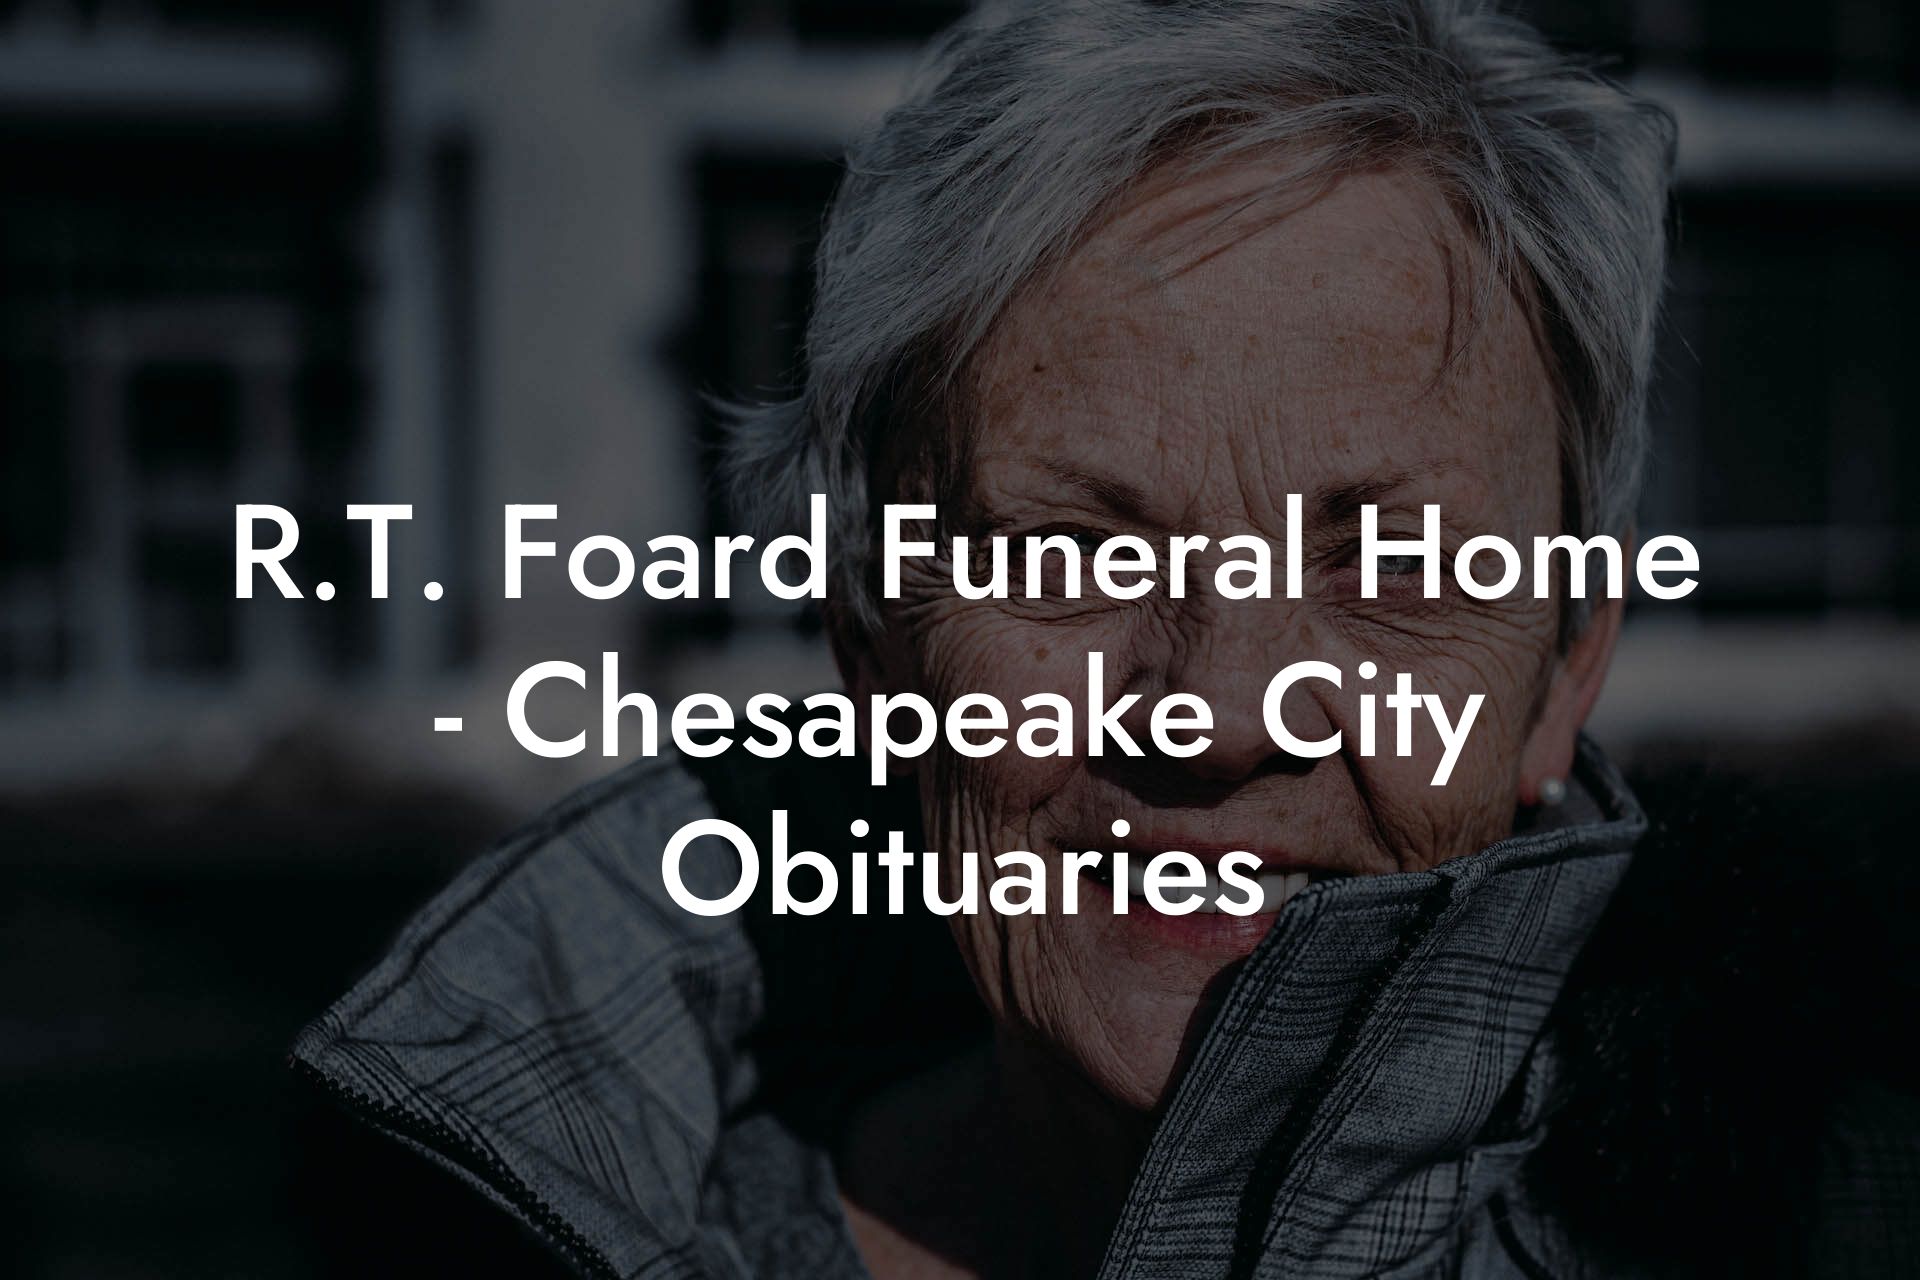 R.T. Foard Funeral Home - Chesapeake City Obituaries